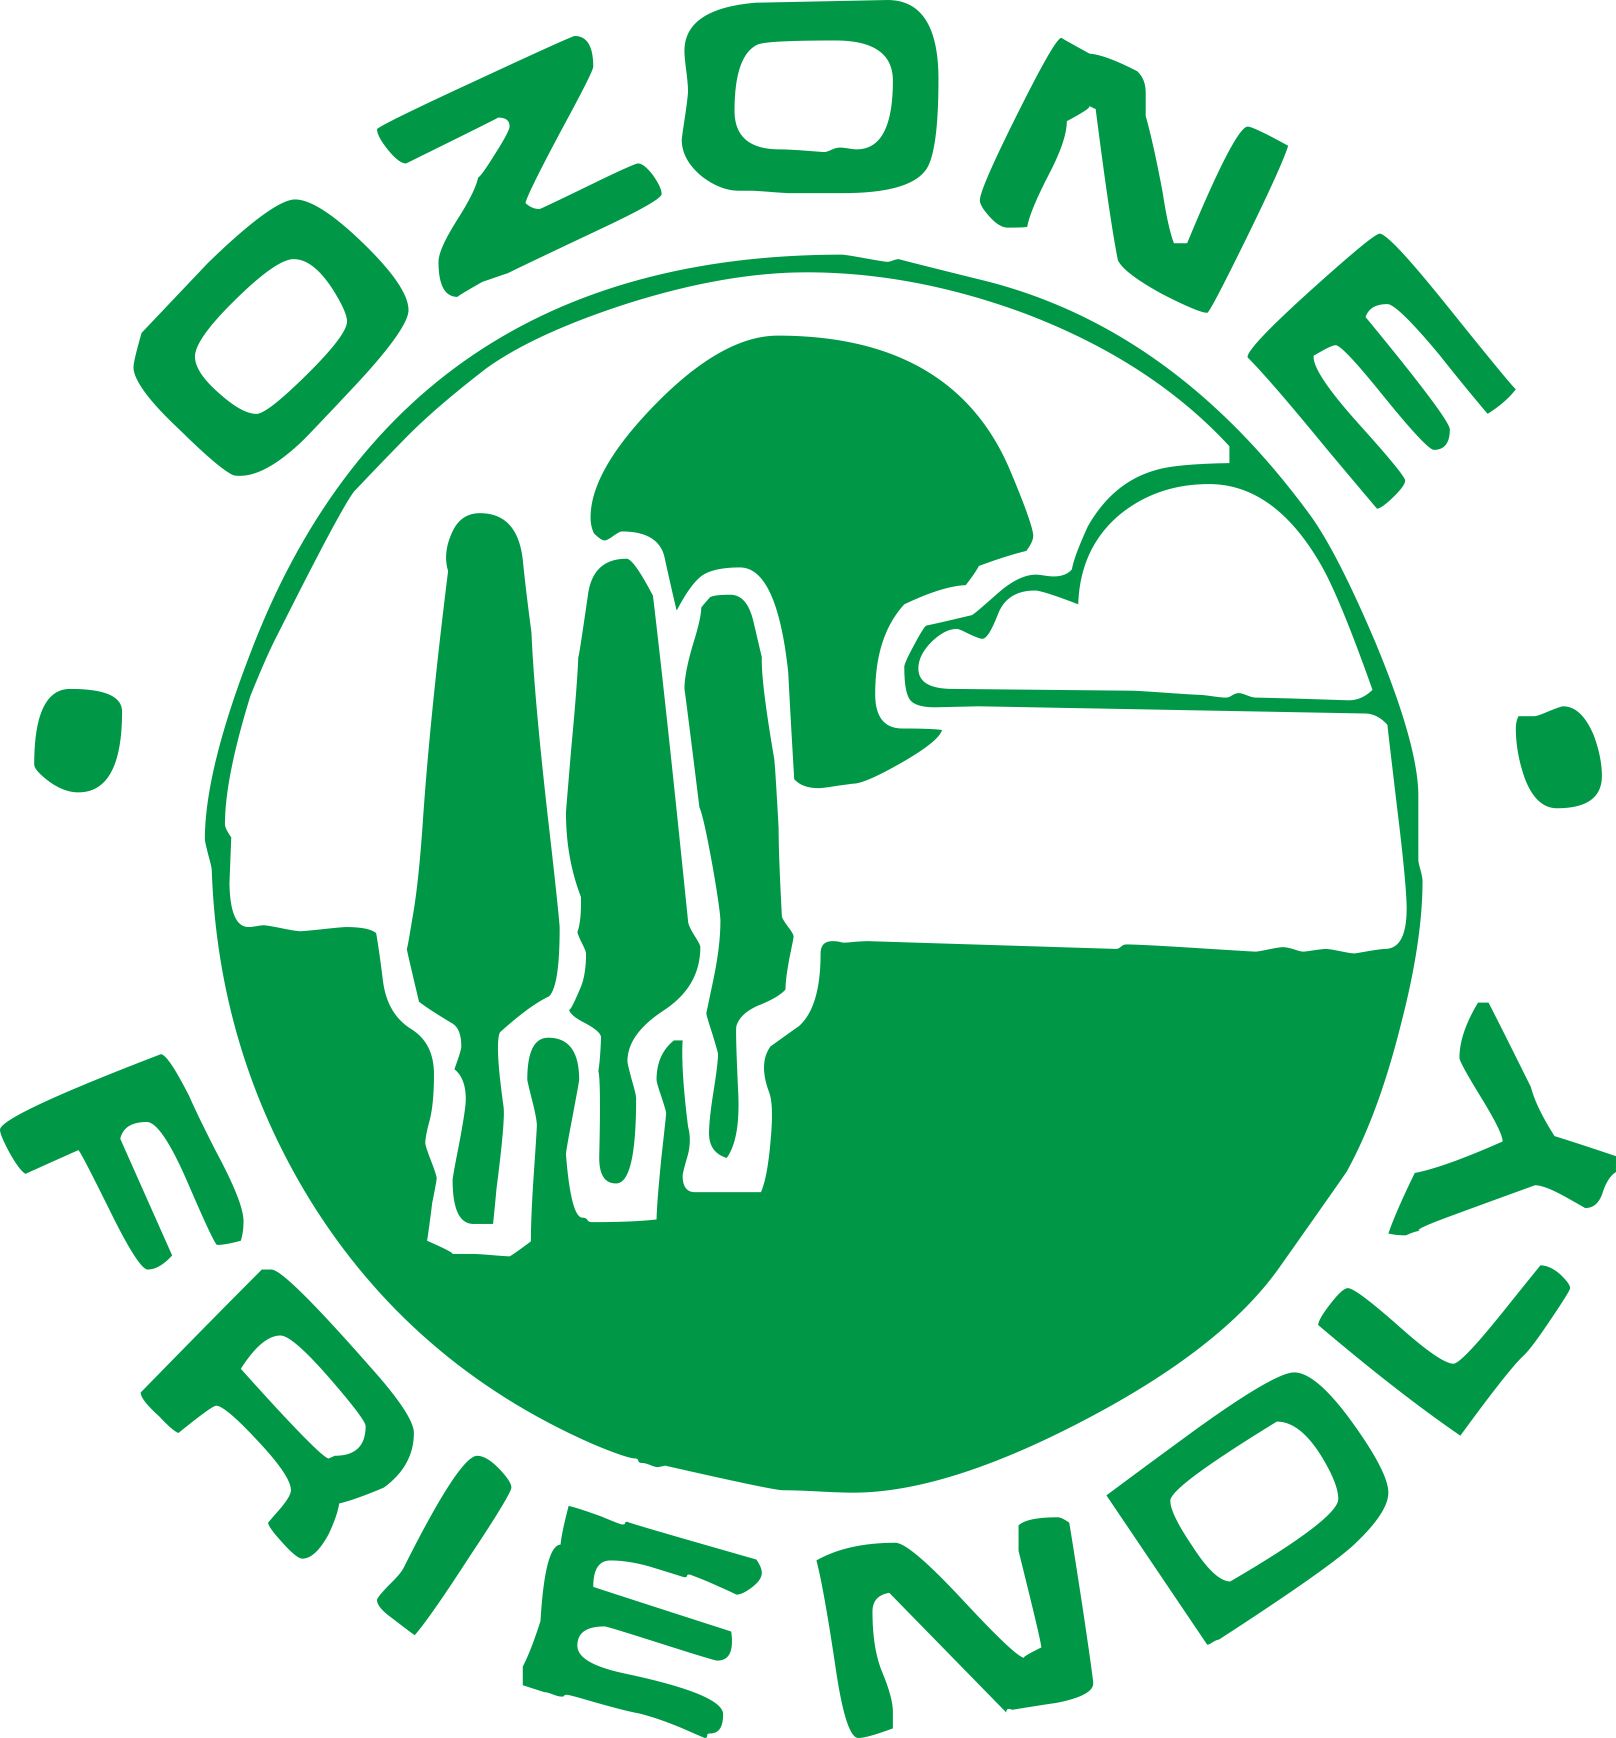 Friendly products. Экознак Ozone friendly. Знаки экологической безопасности. Значок экологии. Значок экологической безопасности.